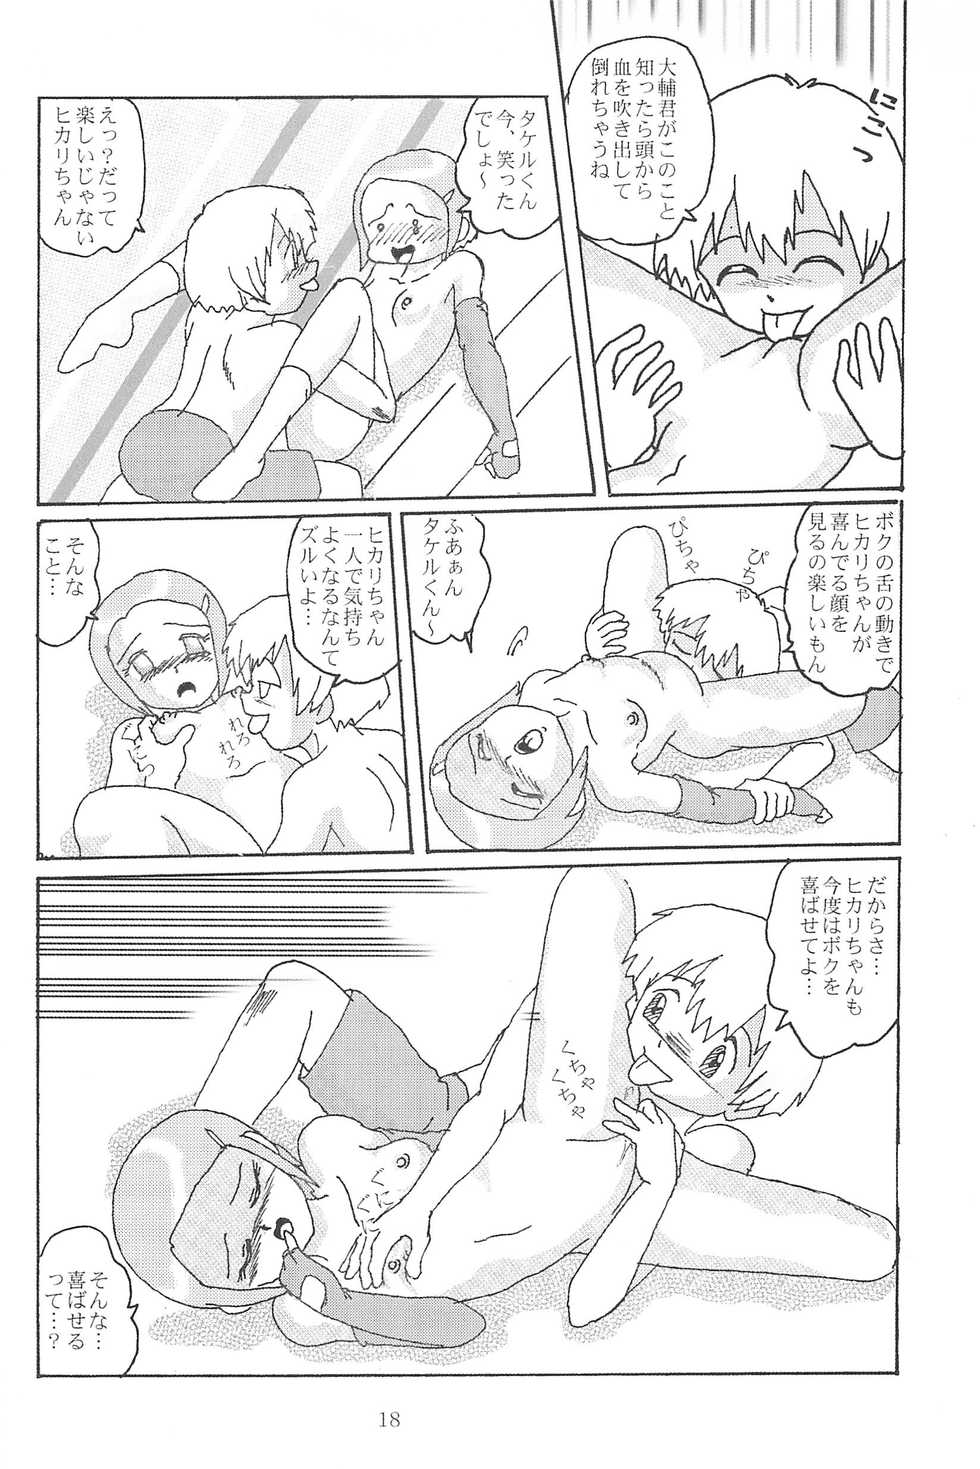 (CR28) [Izumiya] Blow Up 8 (Digimon Adventure 02) - Page 20